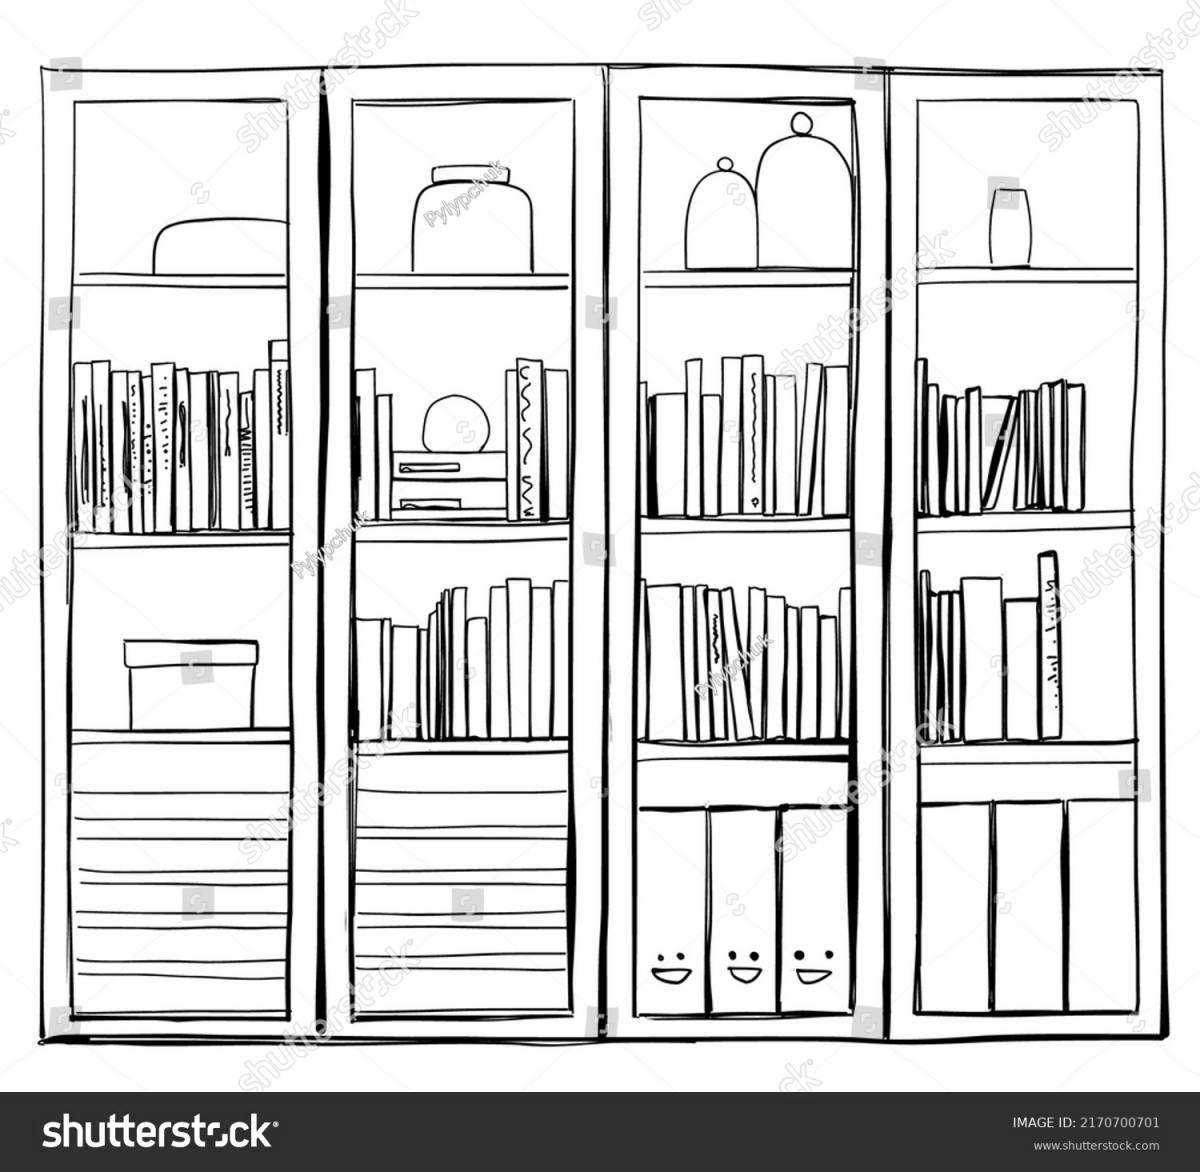 Bright bookshelf for coloring